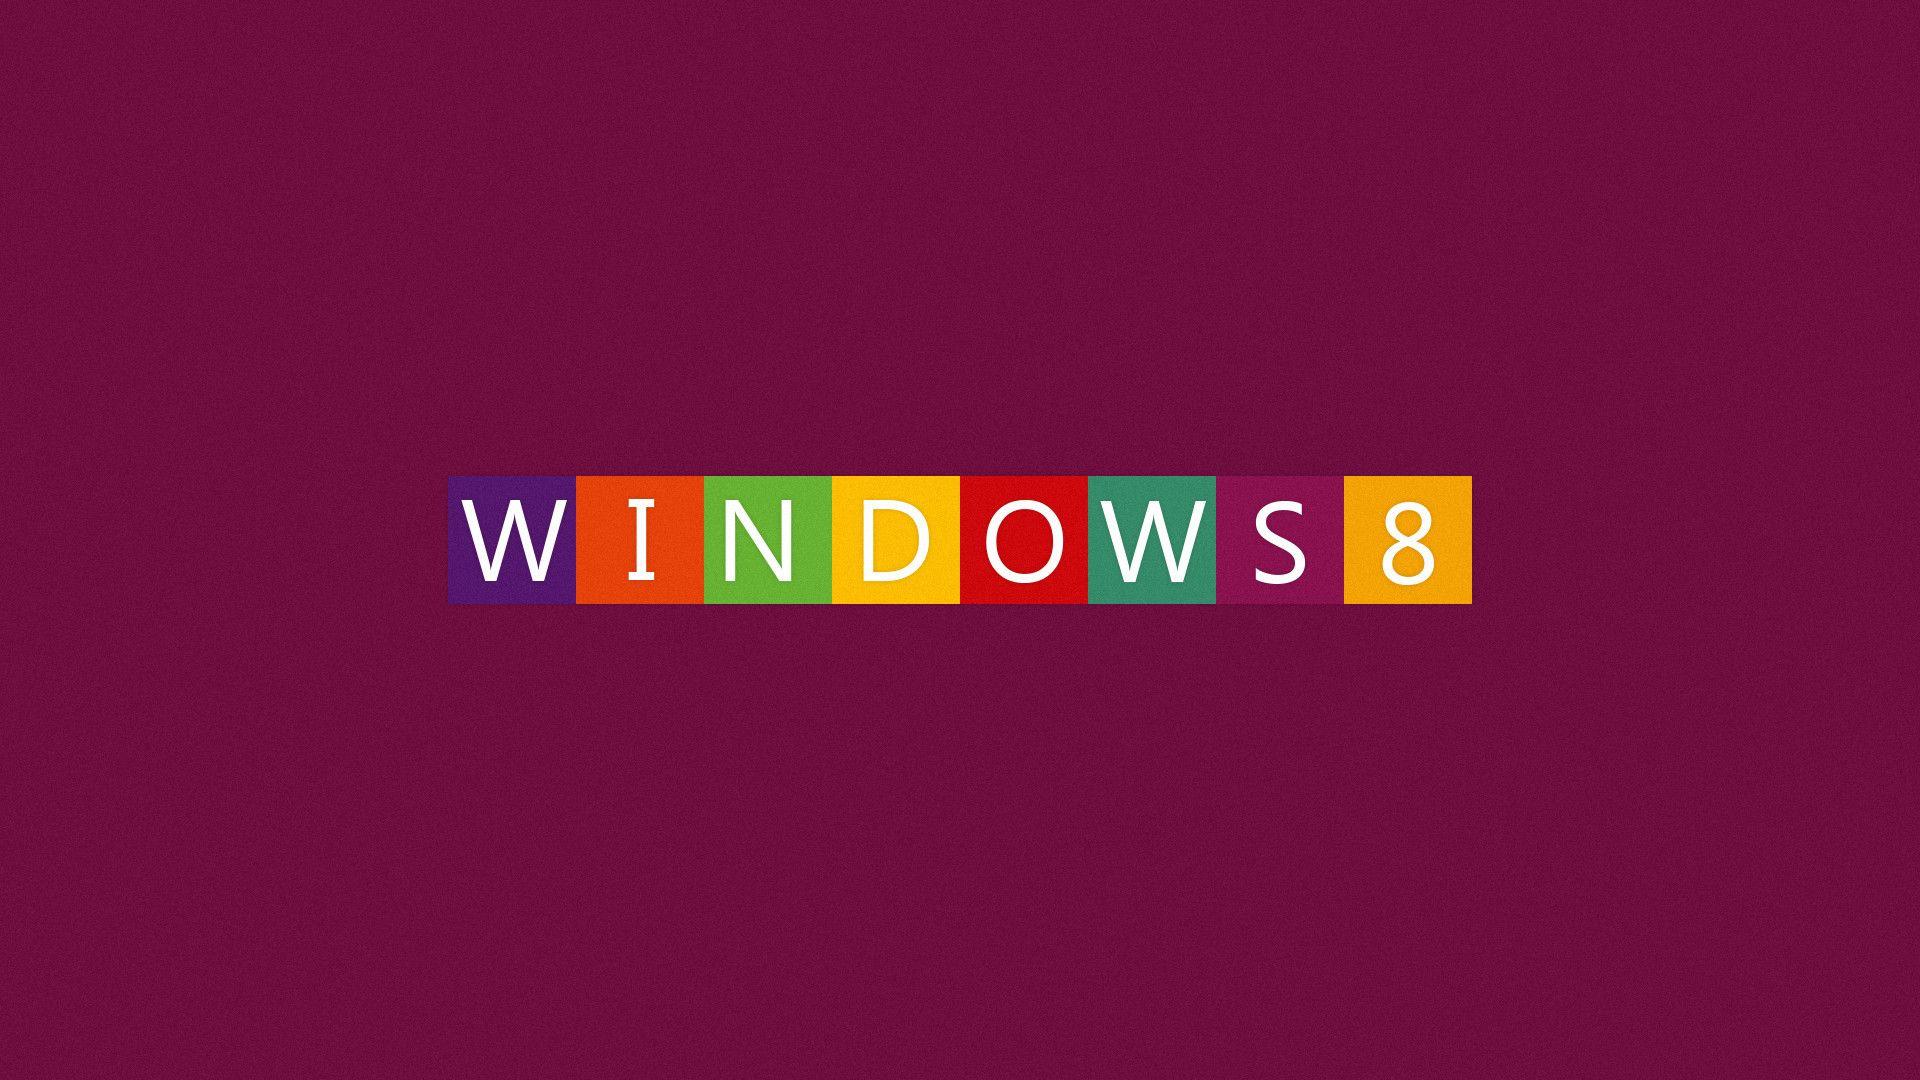 Wallpaper For > Windows 8 Official Wallpaper Purple